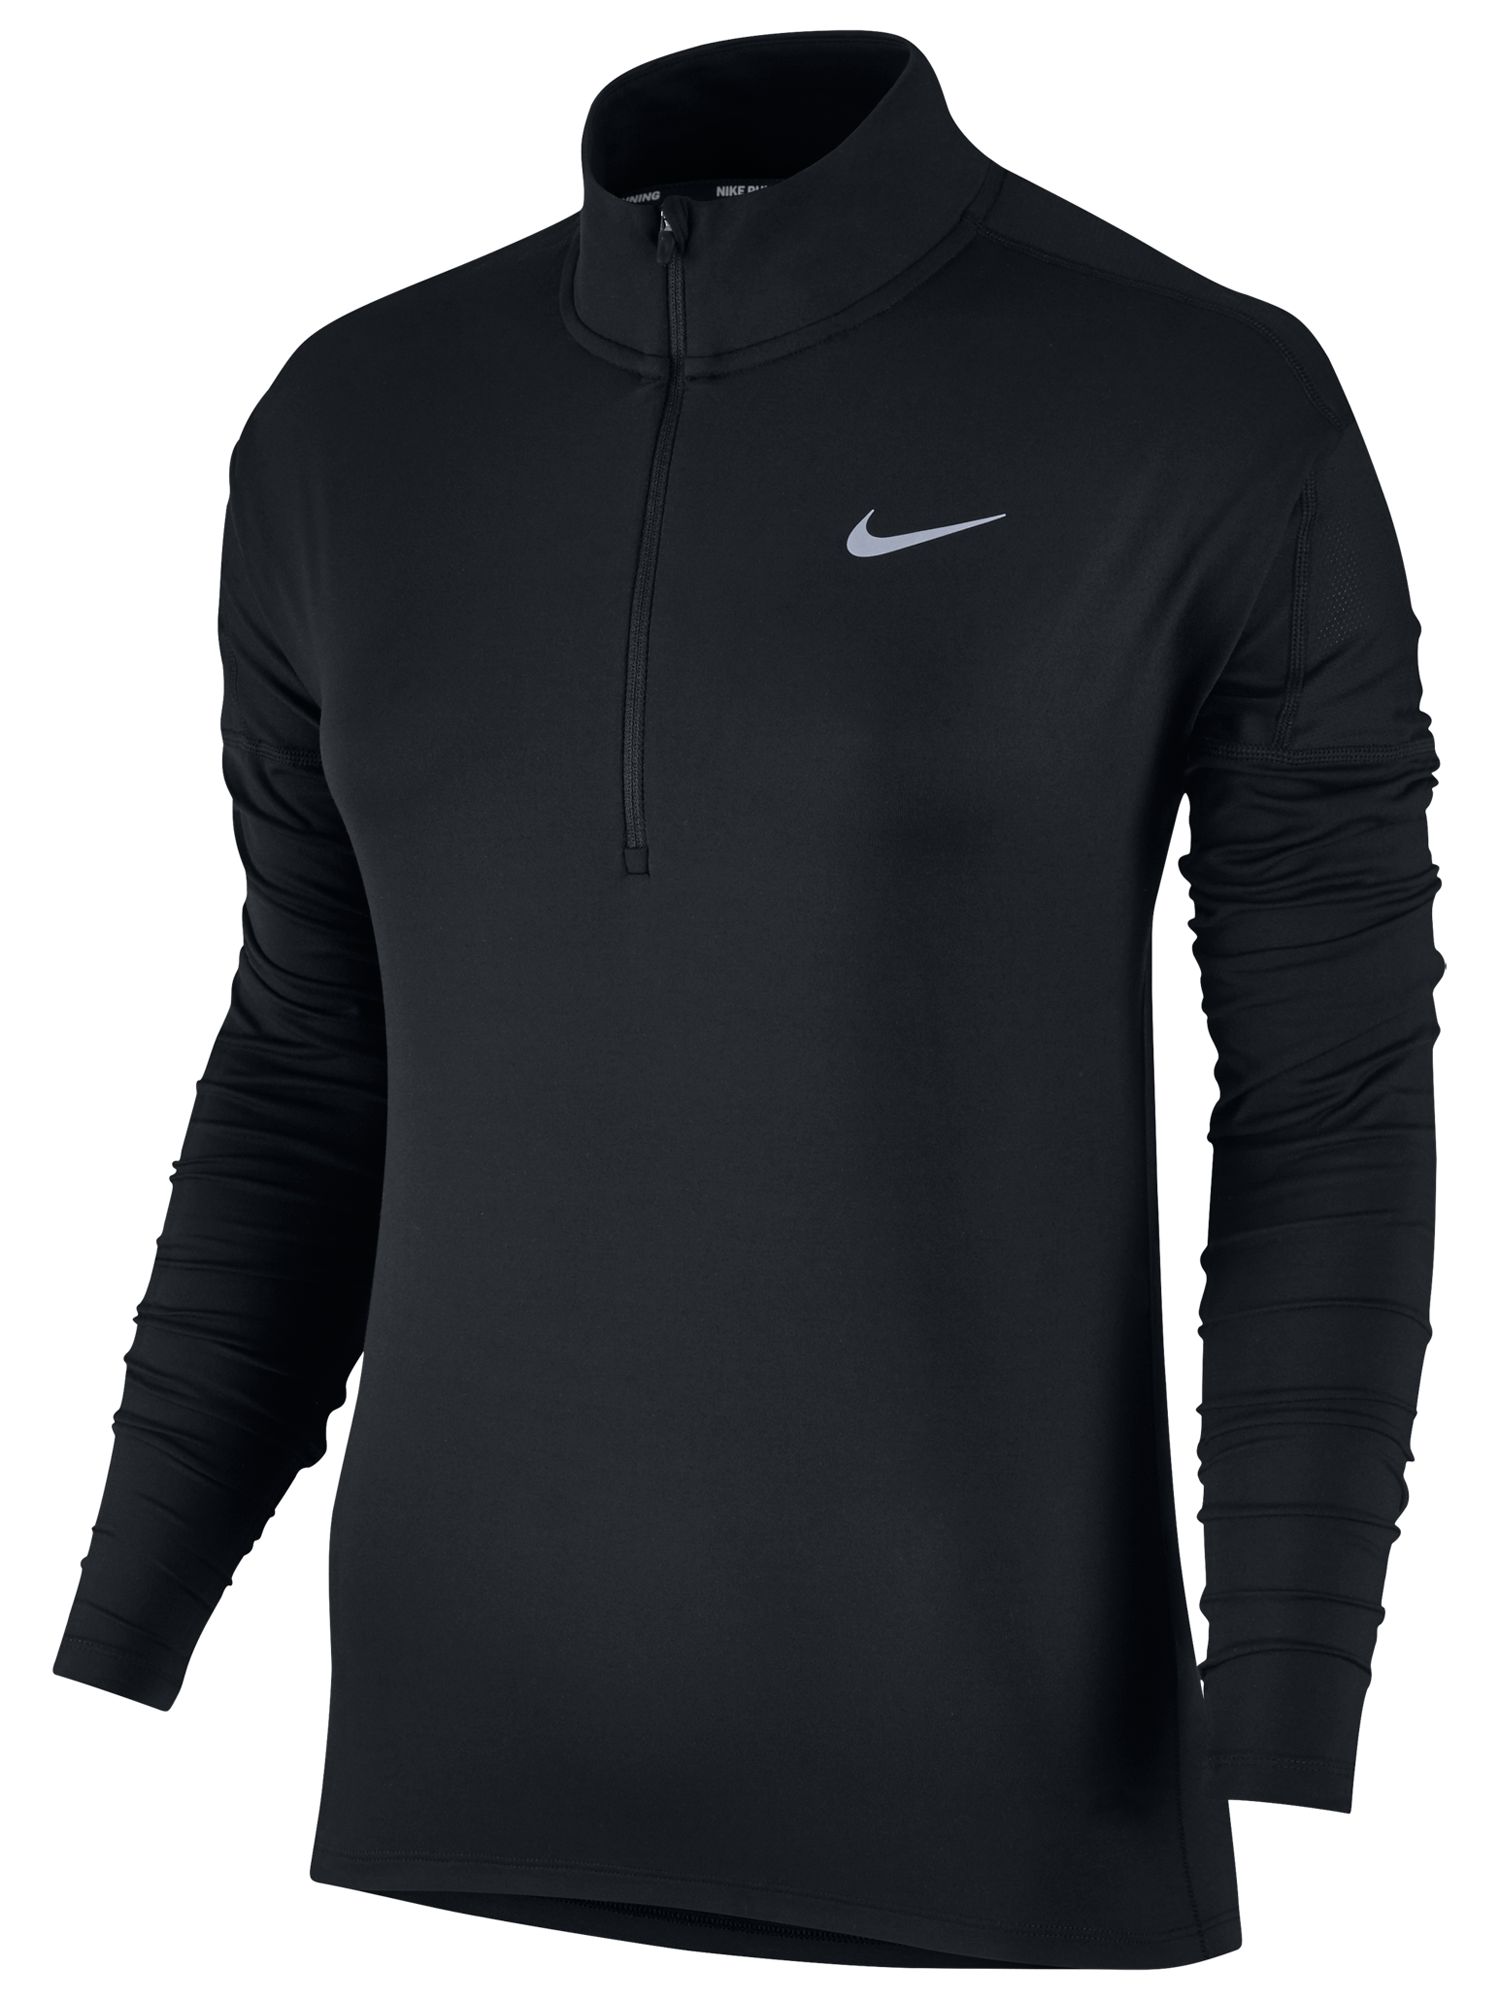 Nike Dry Element Long Sleeve Running Top, Black, S